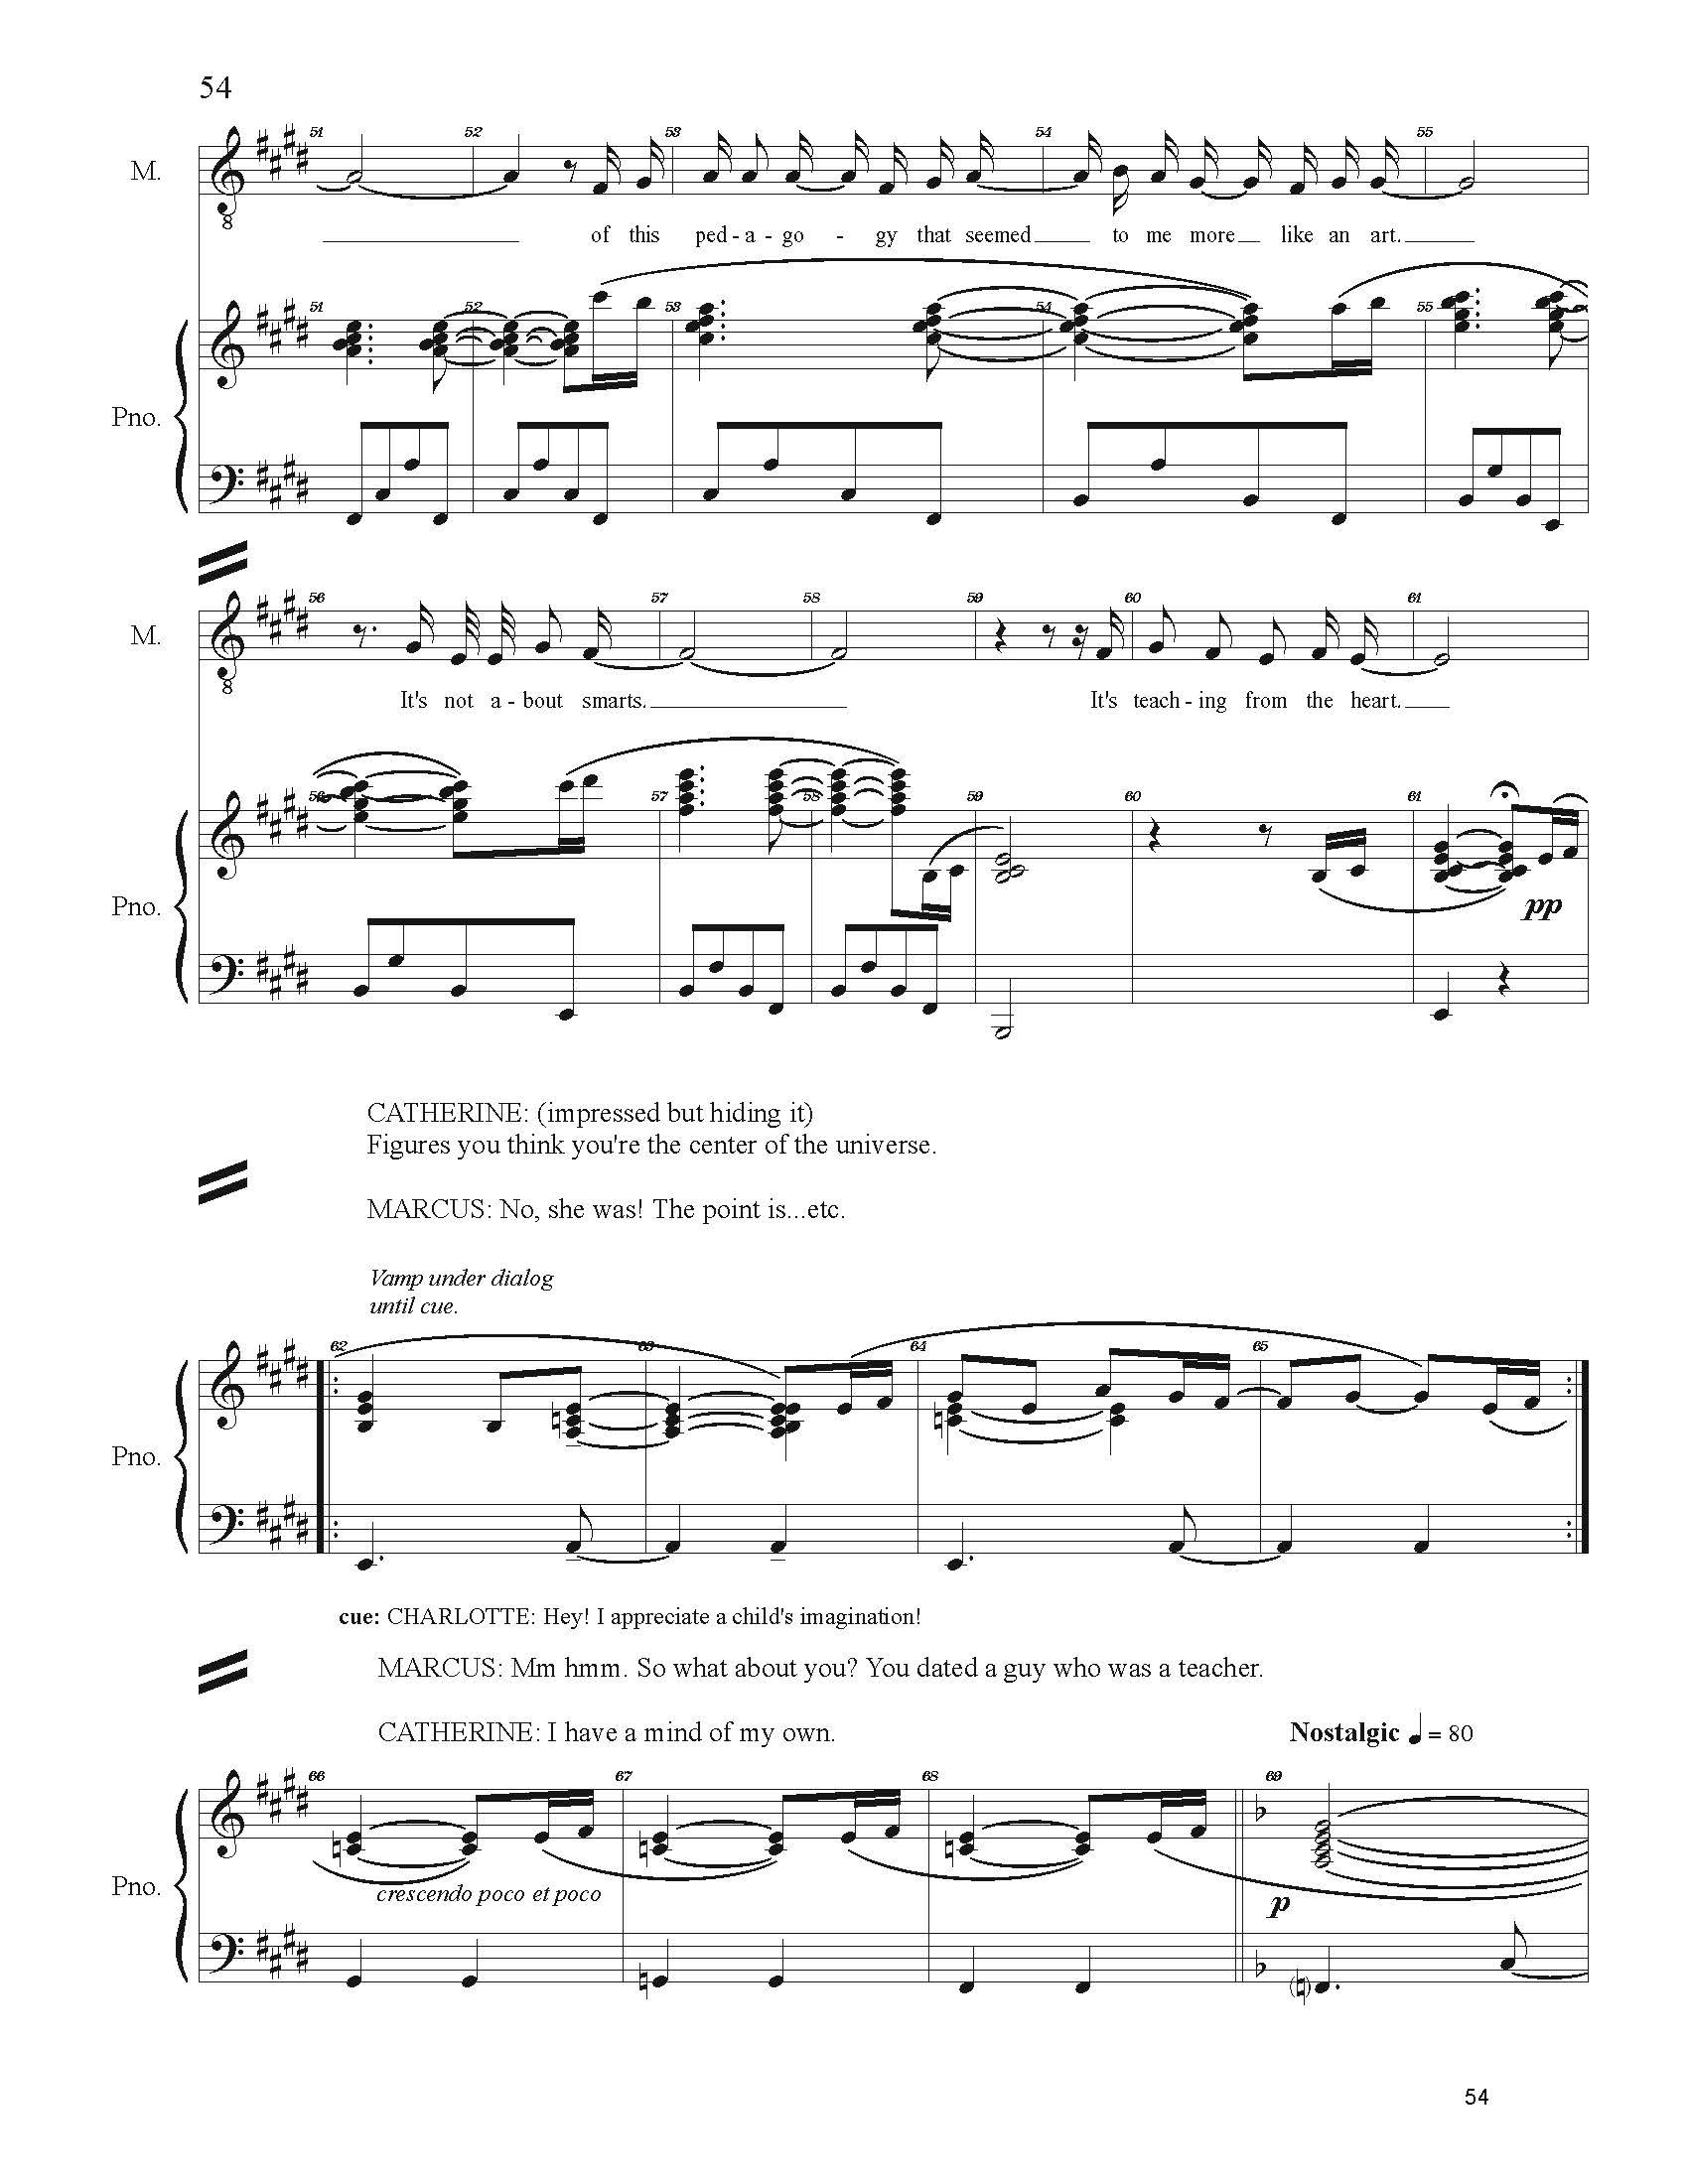 FULL PIANO VOCAL SCORE DRAFT 1 - Score_Page_054.jpg